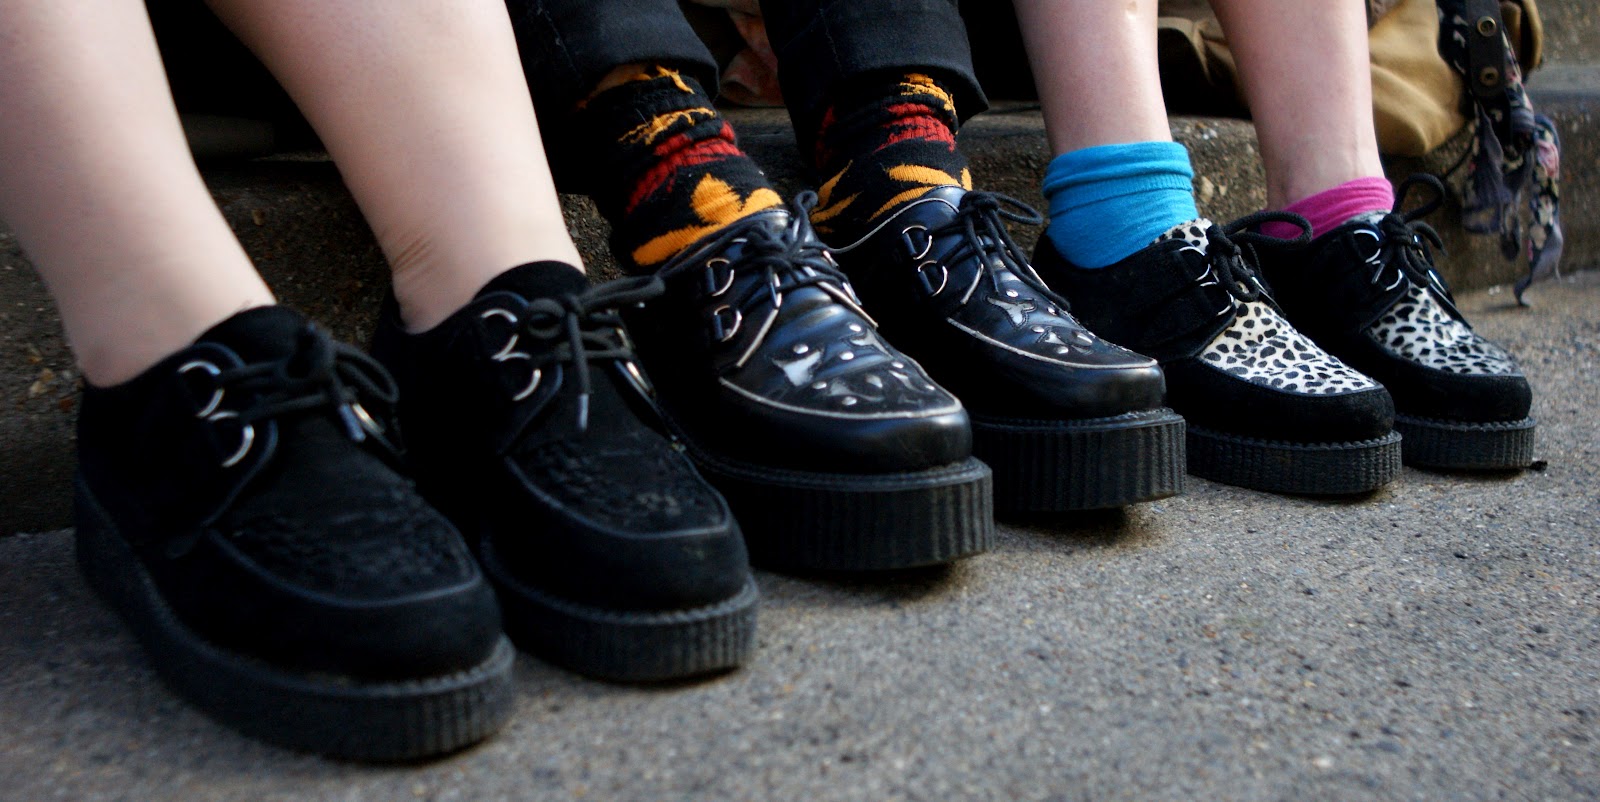 moda | tendências inverno 2013 | apostas de roupa para 2013 | creepers | sneakers | tendências de sapato para 2013 | estilo | calçados | tendências de calçado para 2013 |